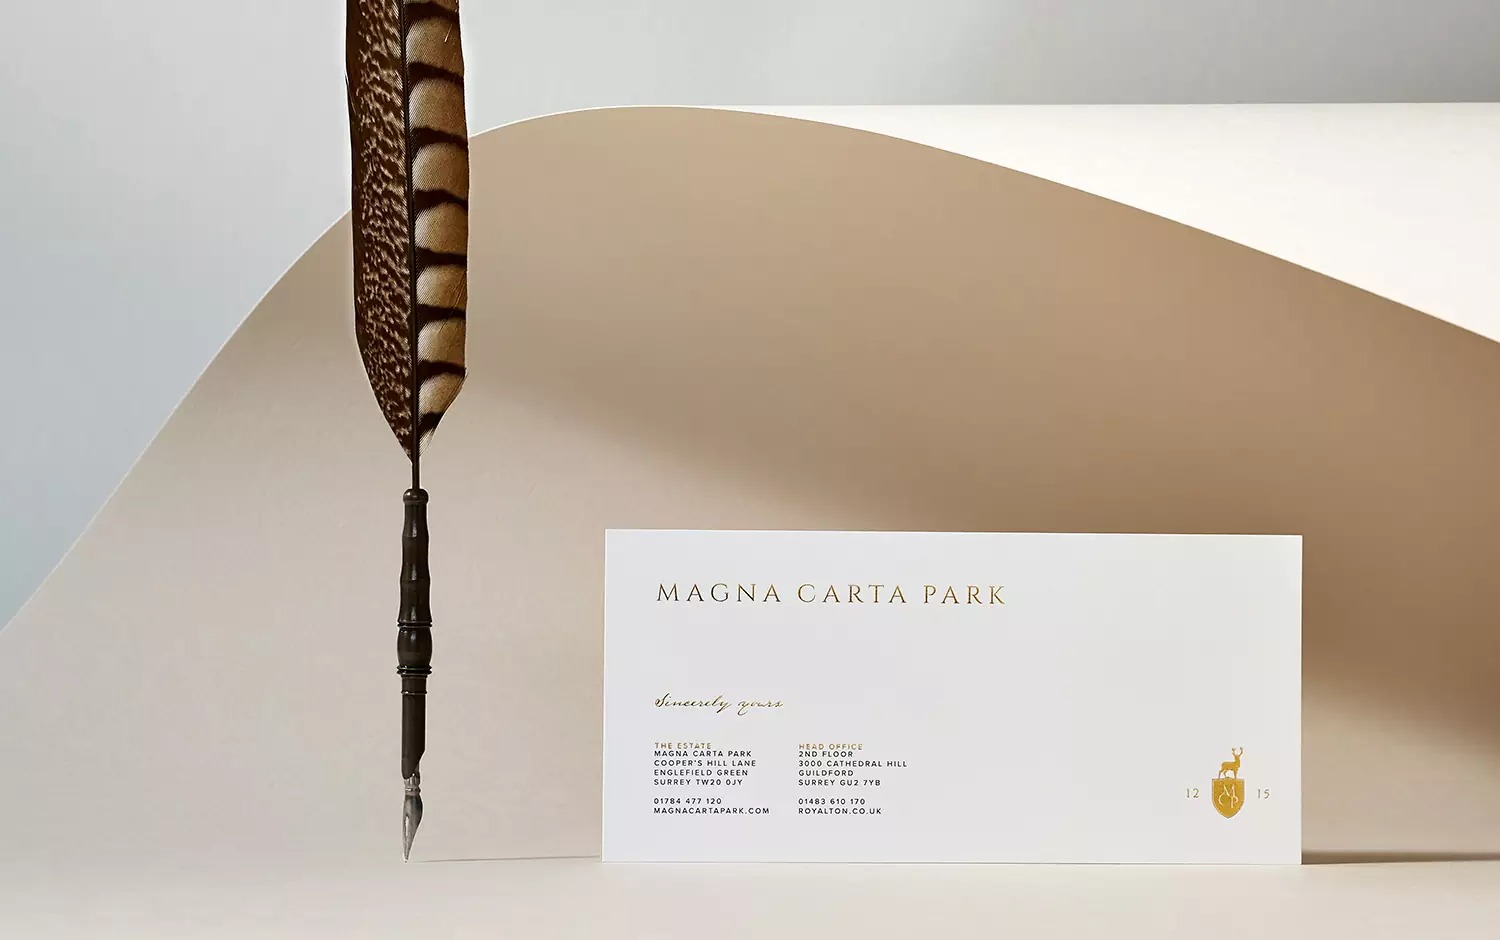 Magna Carta Park高端地产项目全案设计